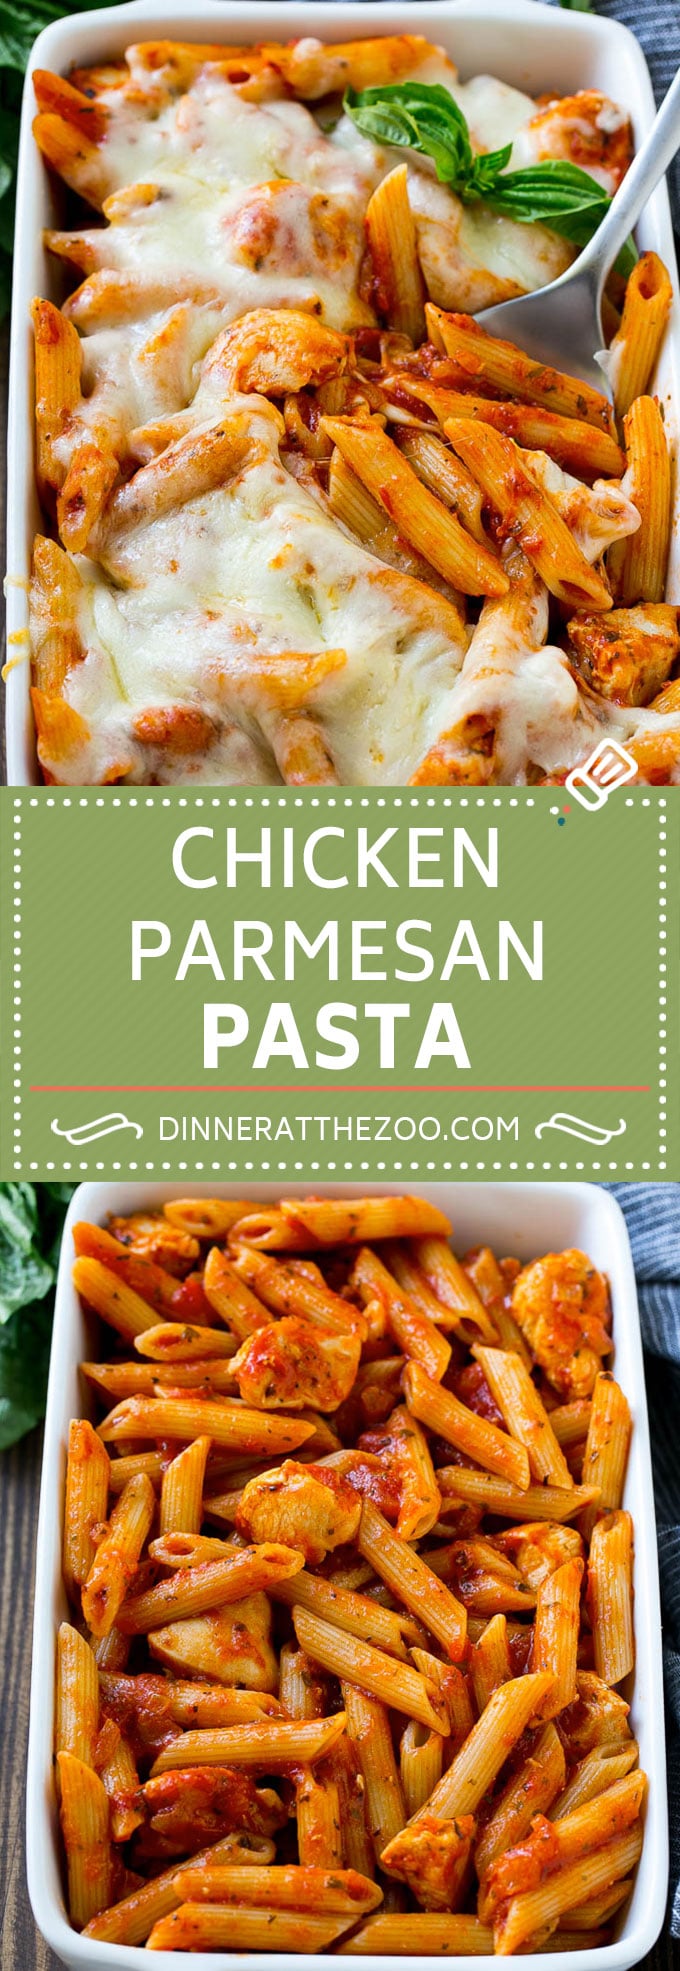 Chicken Parmesan Pasta Recipe | Baked Pasta Recipe | Chicken Pasta Recipe #pasta #chicken #cheese #dinner #comfortfood #dinneratthezoo